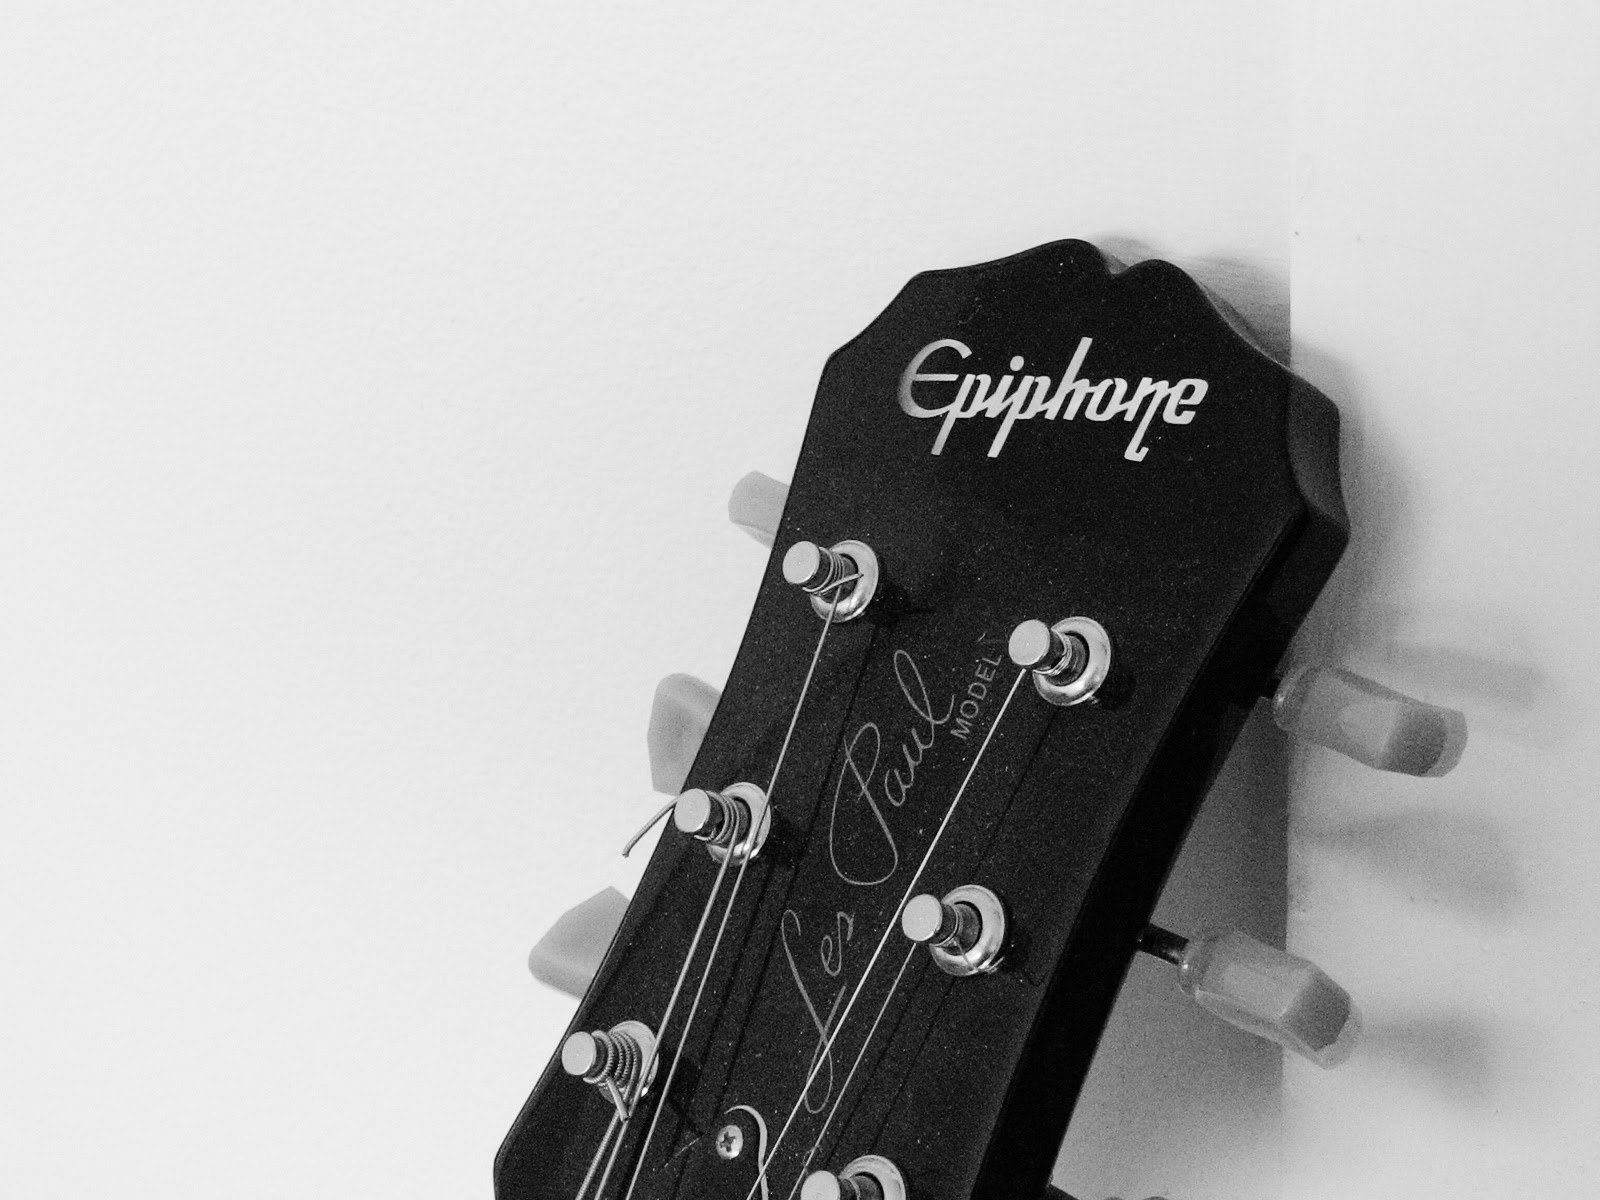 Guitar Wallpapers Hd Backgrounds, Images, Pics, Photos - Hd Epiphone Guitar - HD Wallpaper 